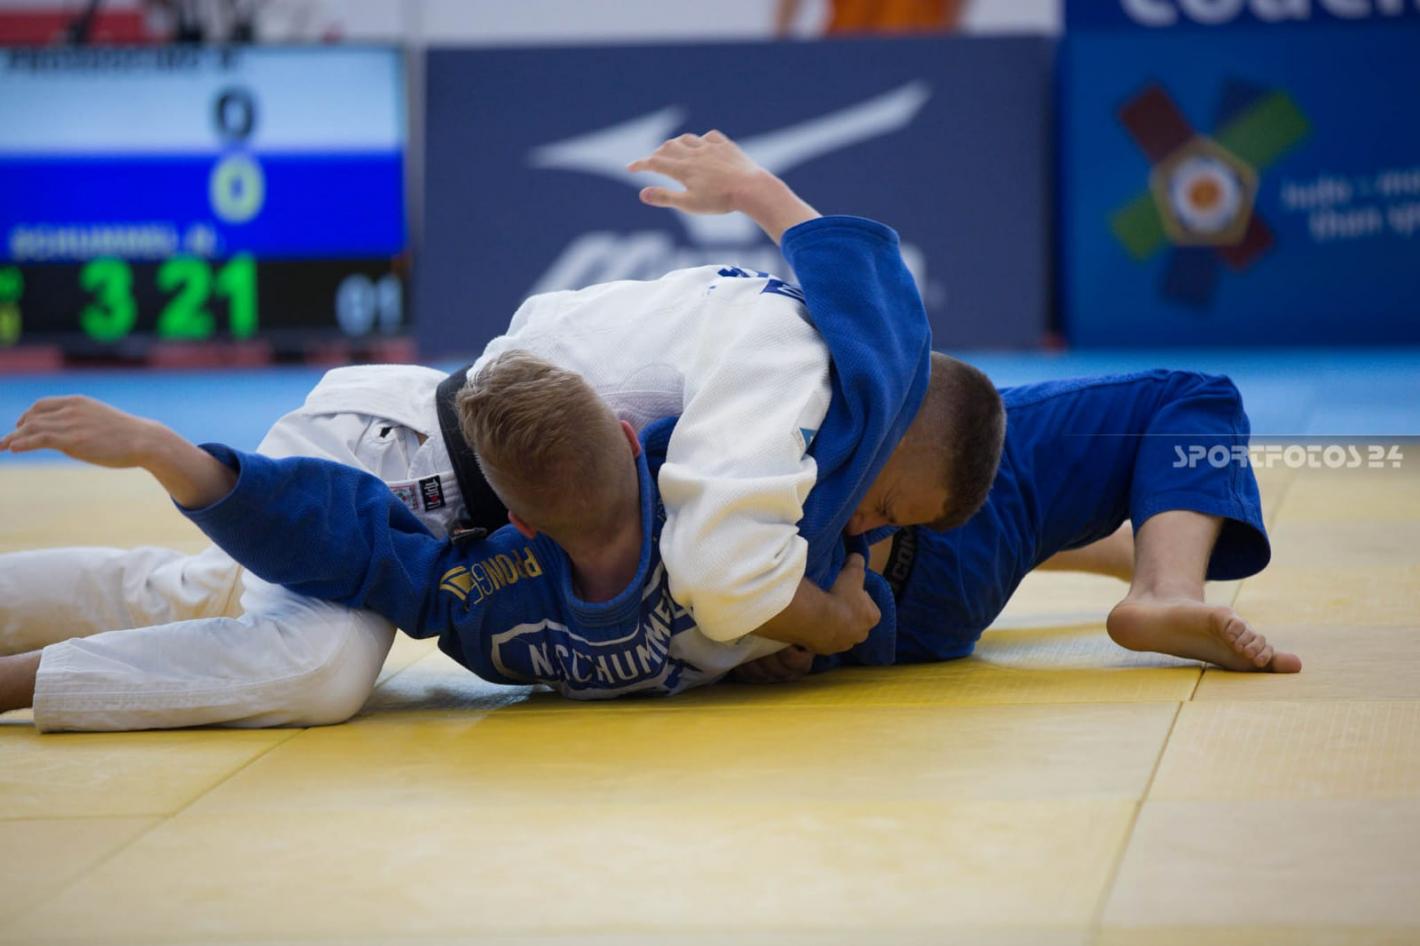 images/veneto/Judo/2019/medium/2019_prosdocimo_europeancupjuniorberlino.jpeg